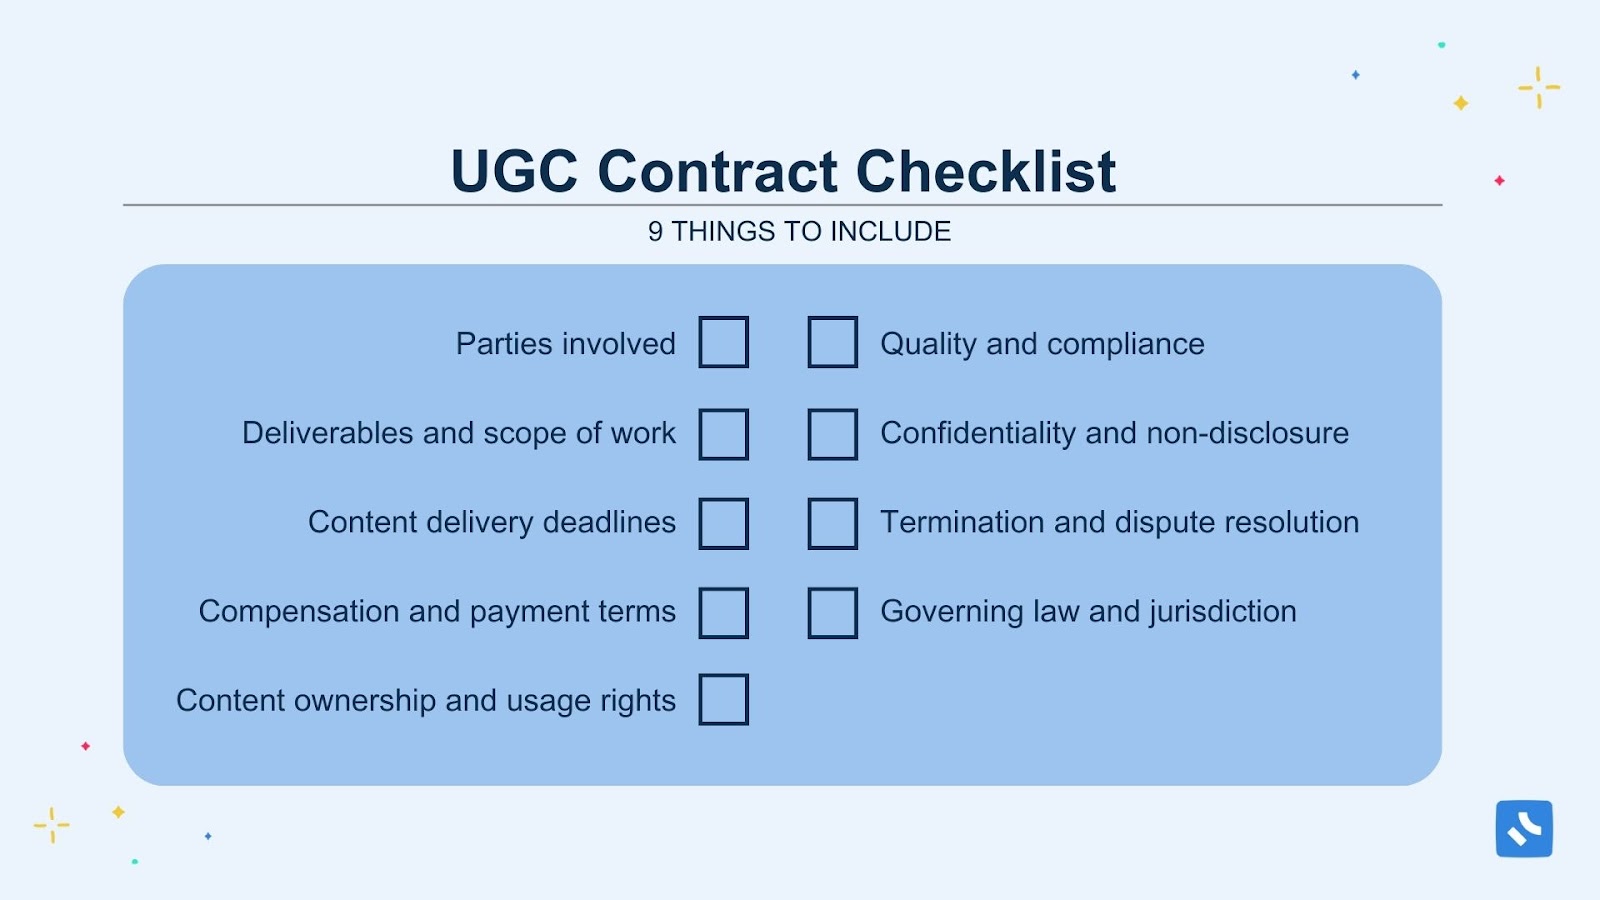 UGC contract checklist